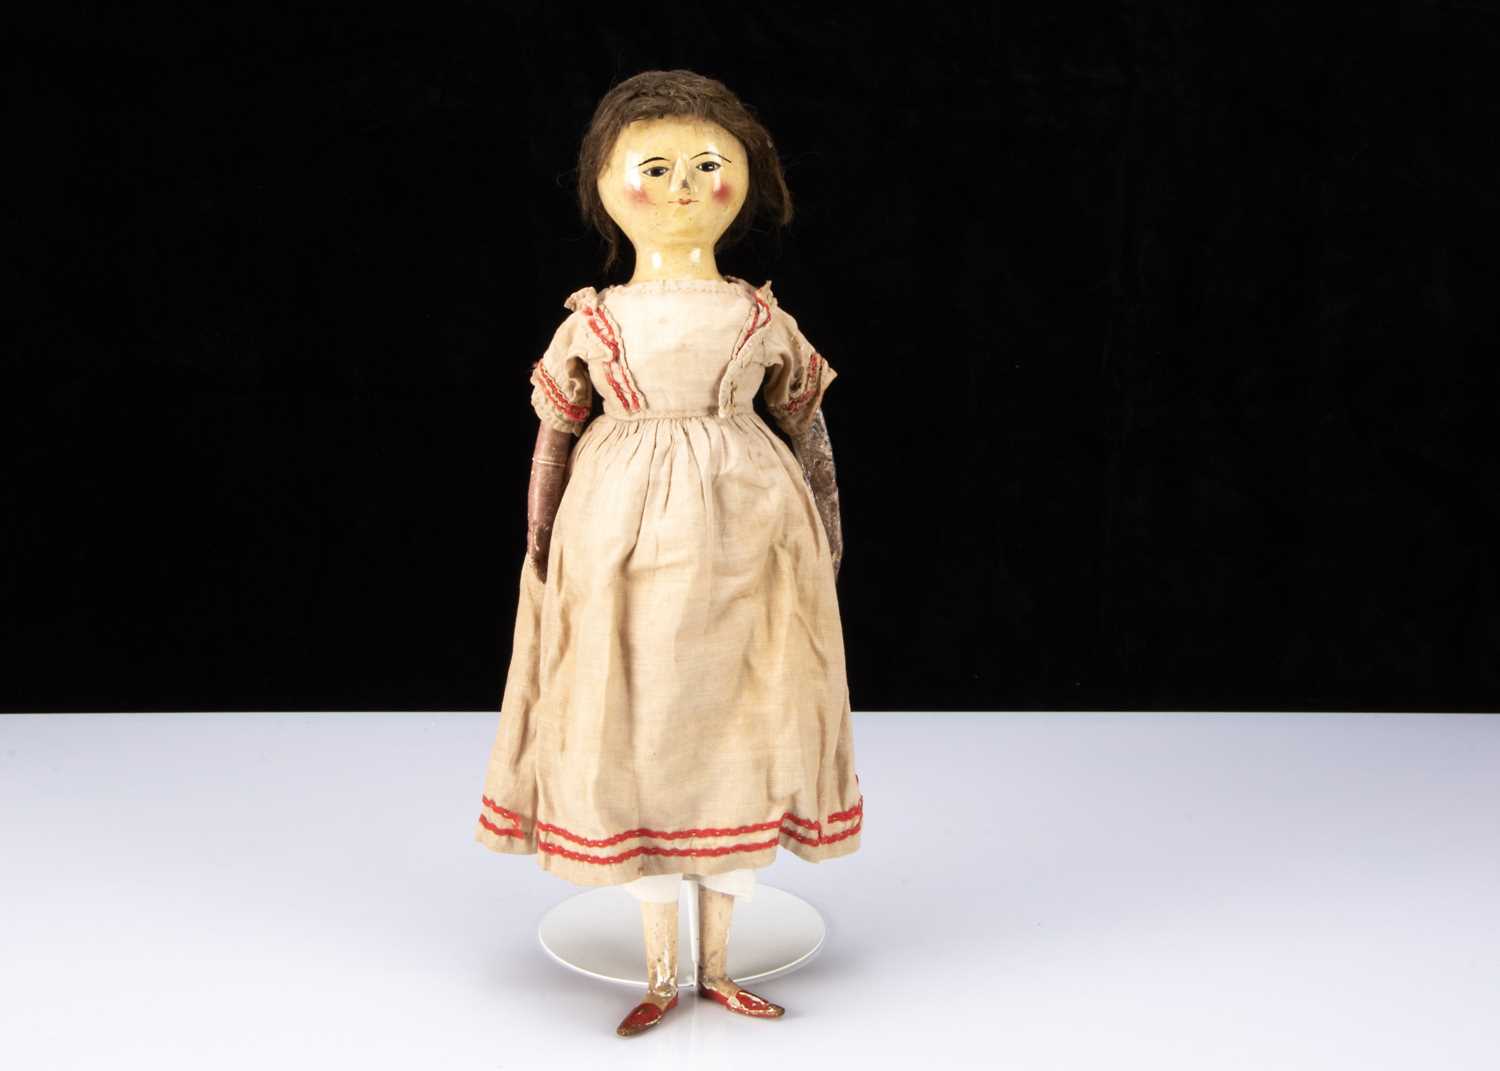 An interesting English wooden girl doll, circa 1800